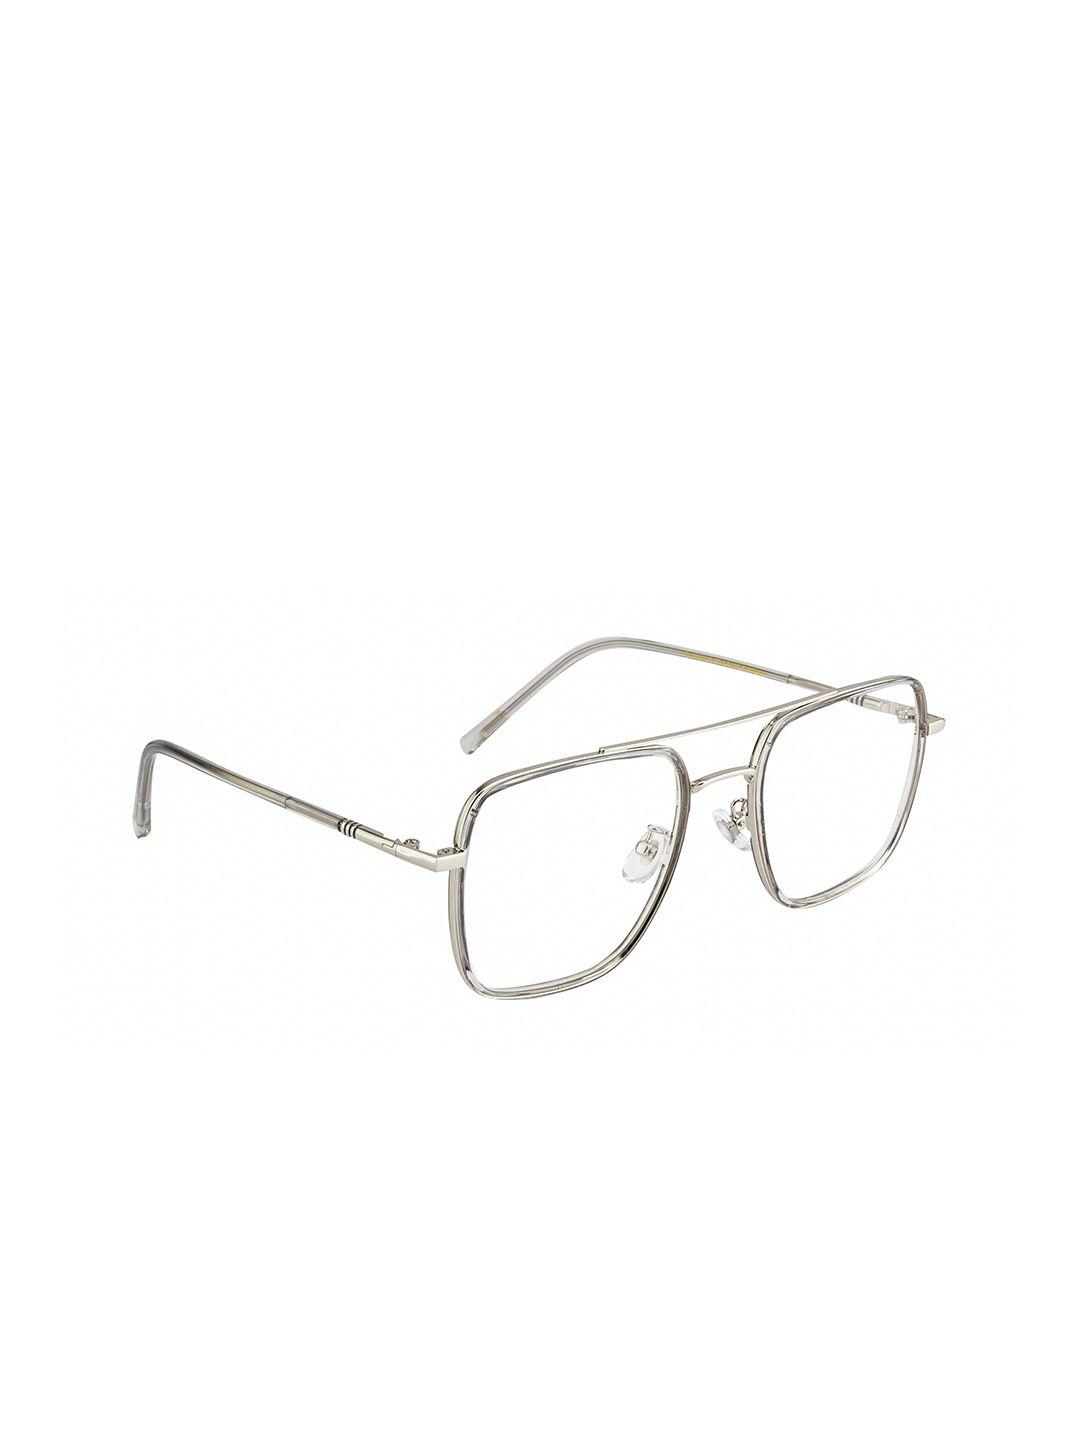 ted smith unisex transparent full rim square frames eyeglasses